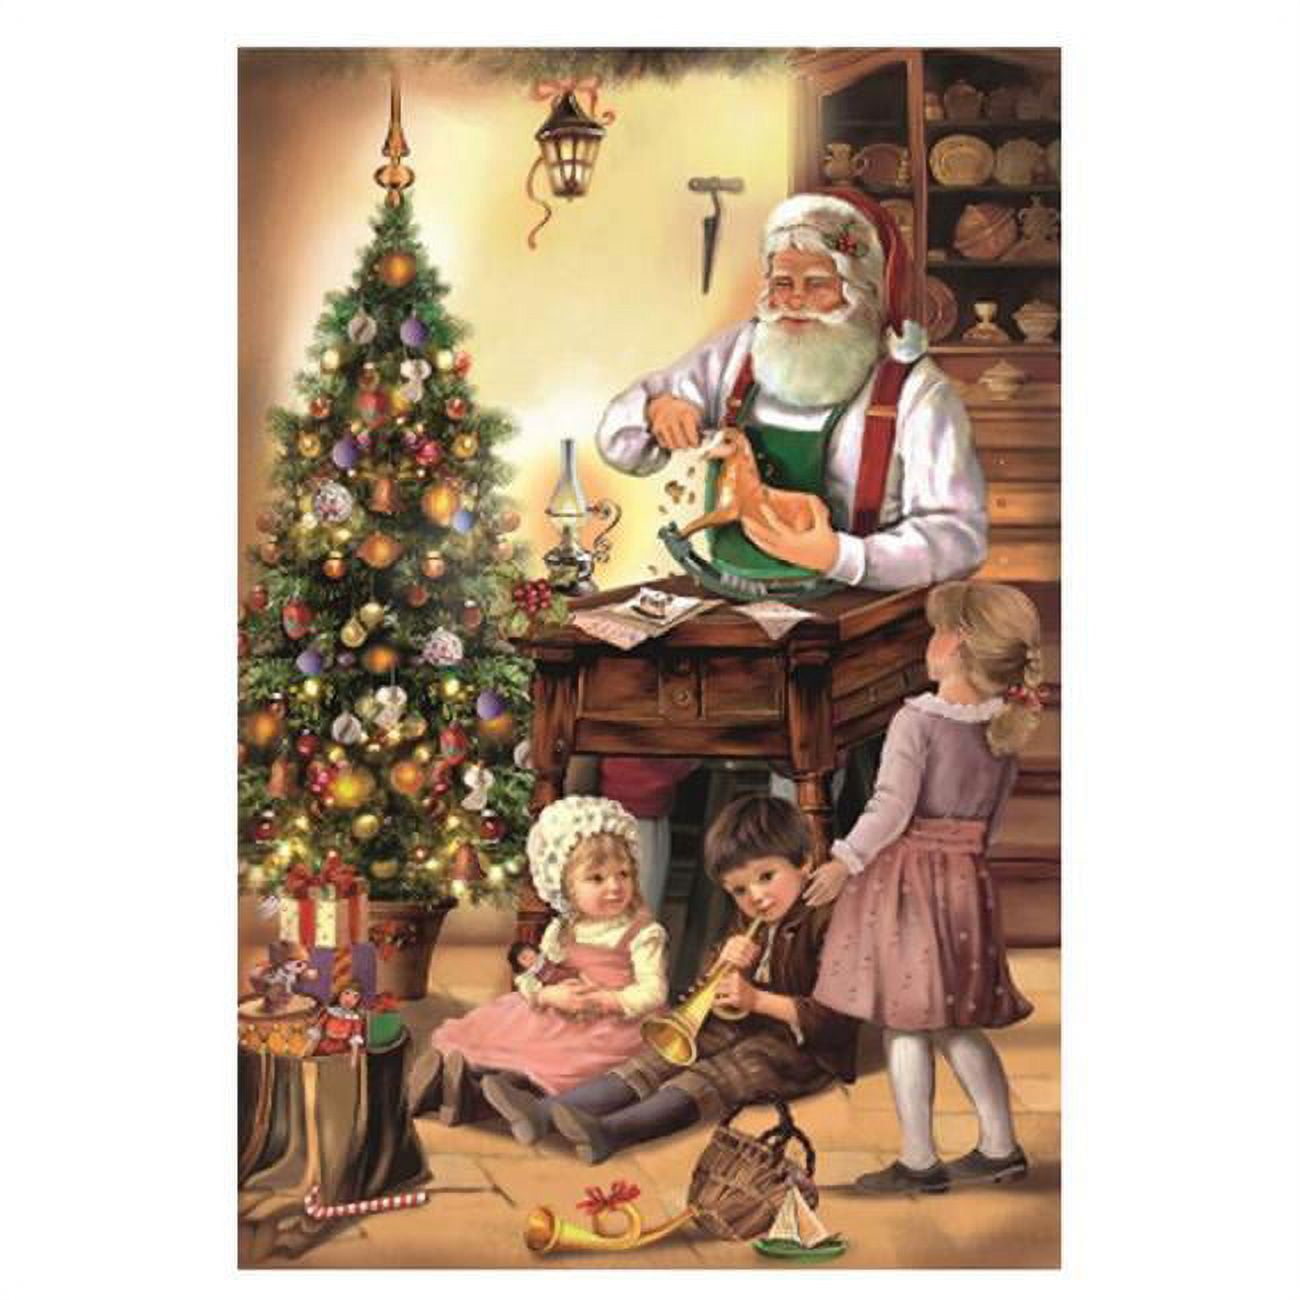 Picture of Alexander Taron 10441 Korsch Advent Calender - Woodworking Santa with Children - 11.75 x 8.25 x 0.1 in.